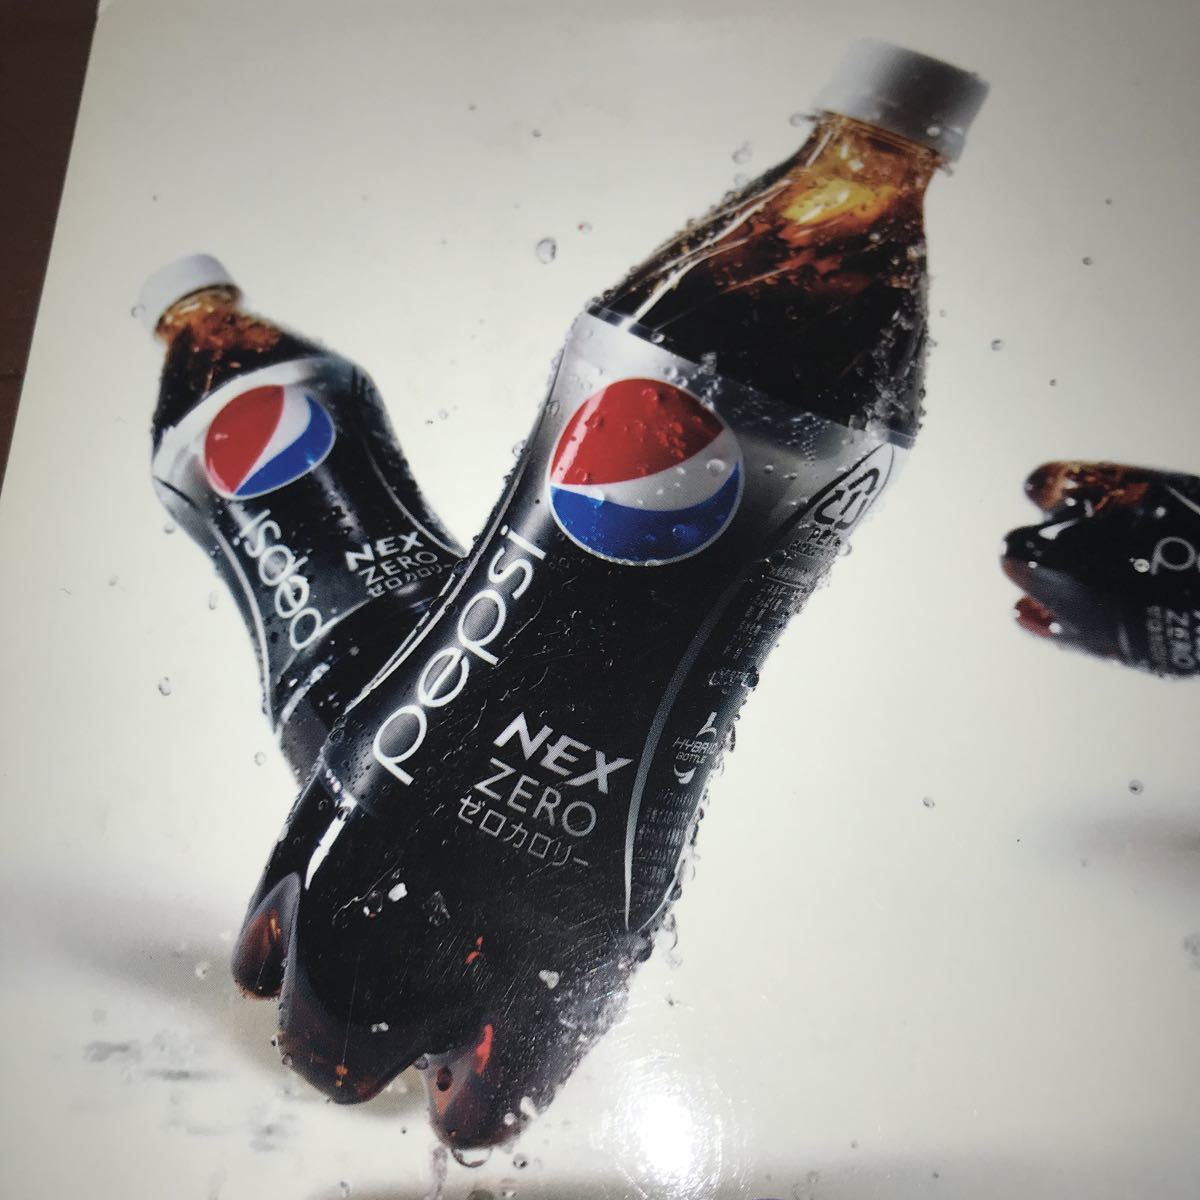  Pepsi NEX for sales promotion pop ×3 piece 